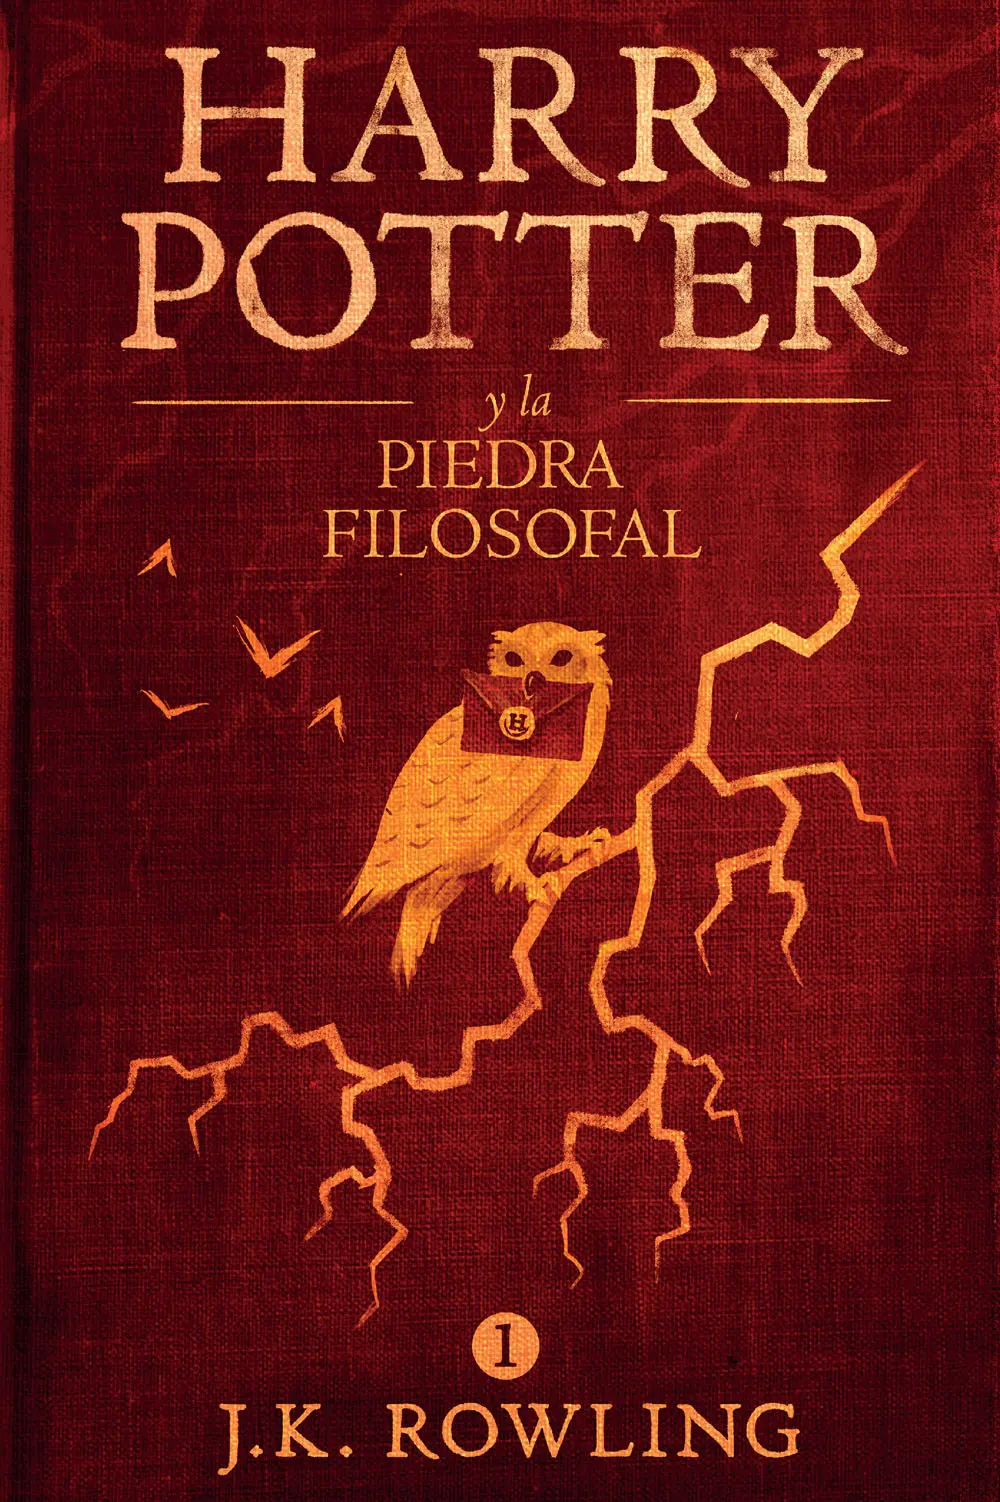 Libro Harry Potter, de J. K. Rowling